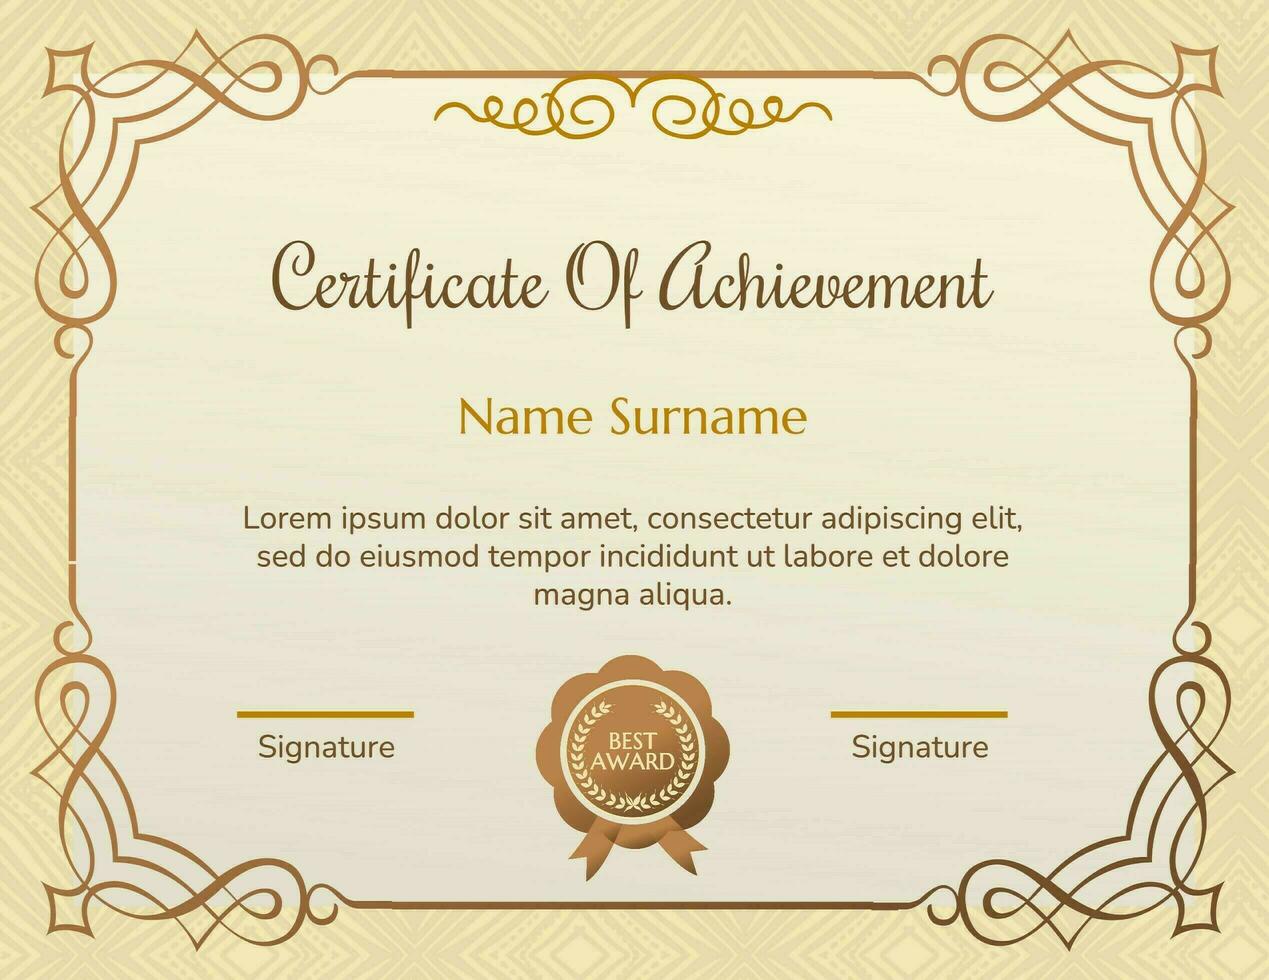 Victorian Certificate of Achievement template